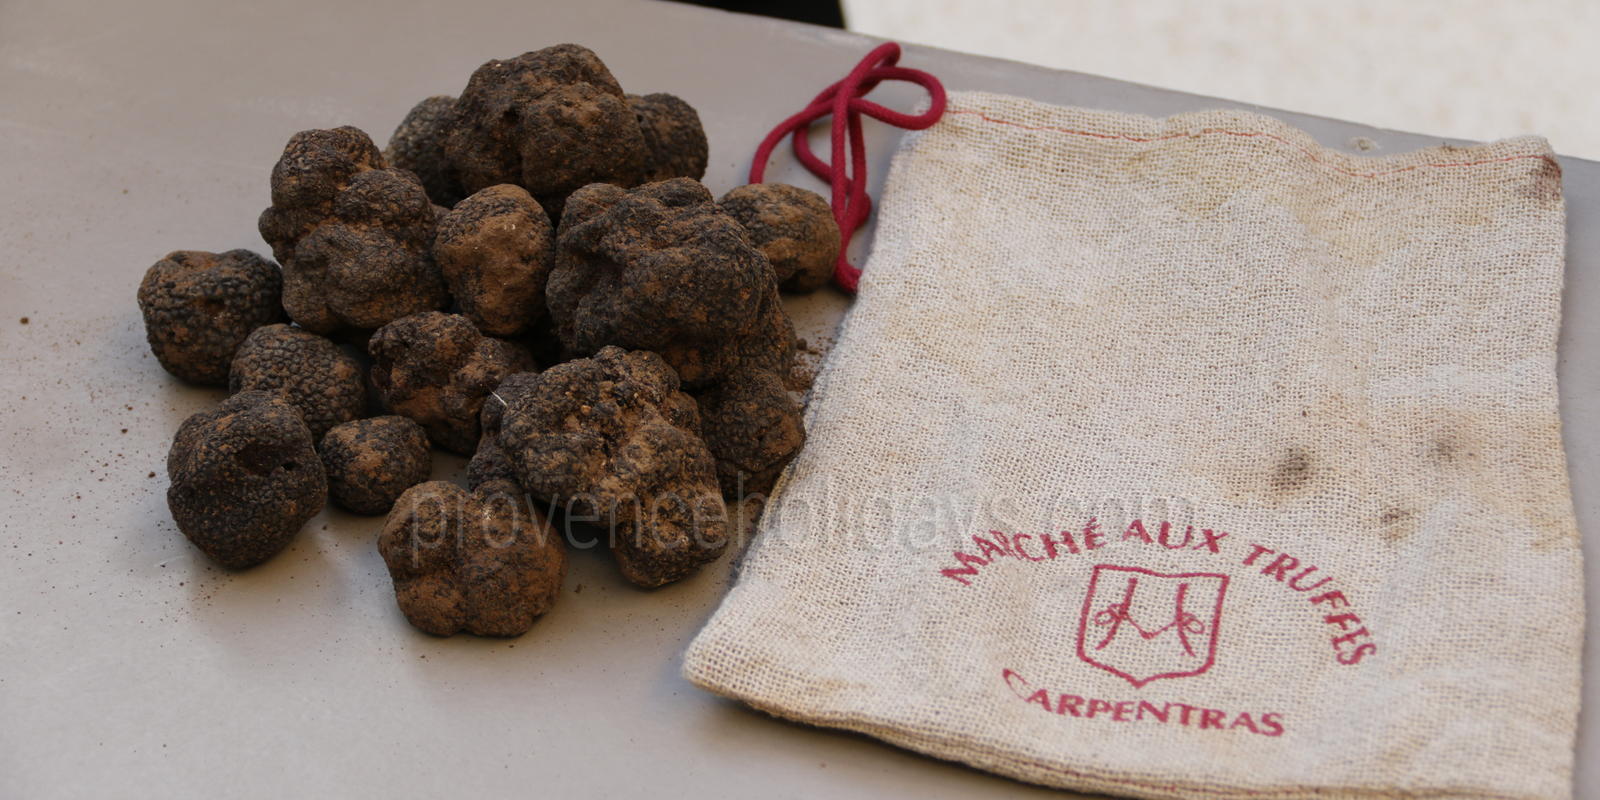 Carpentras truffle market - 0